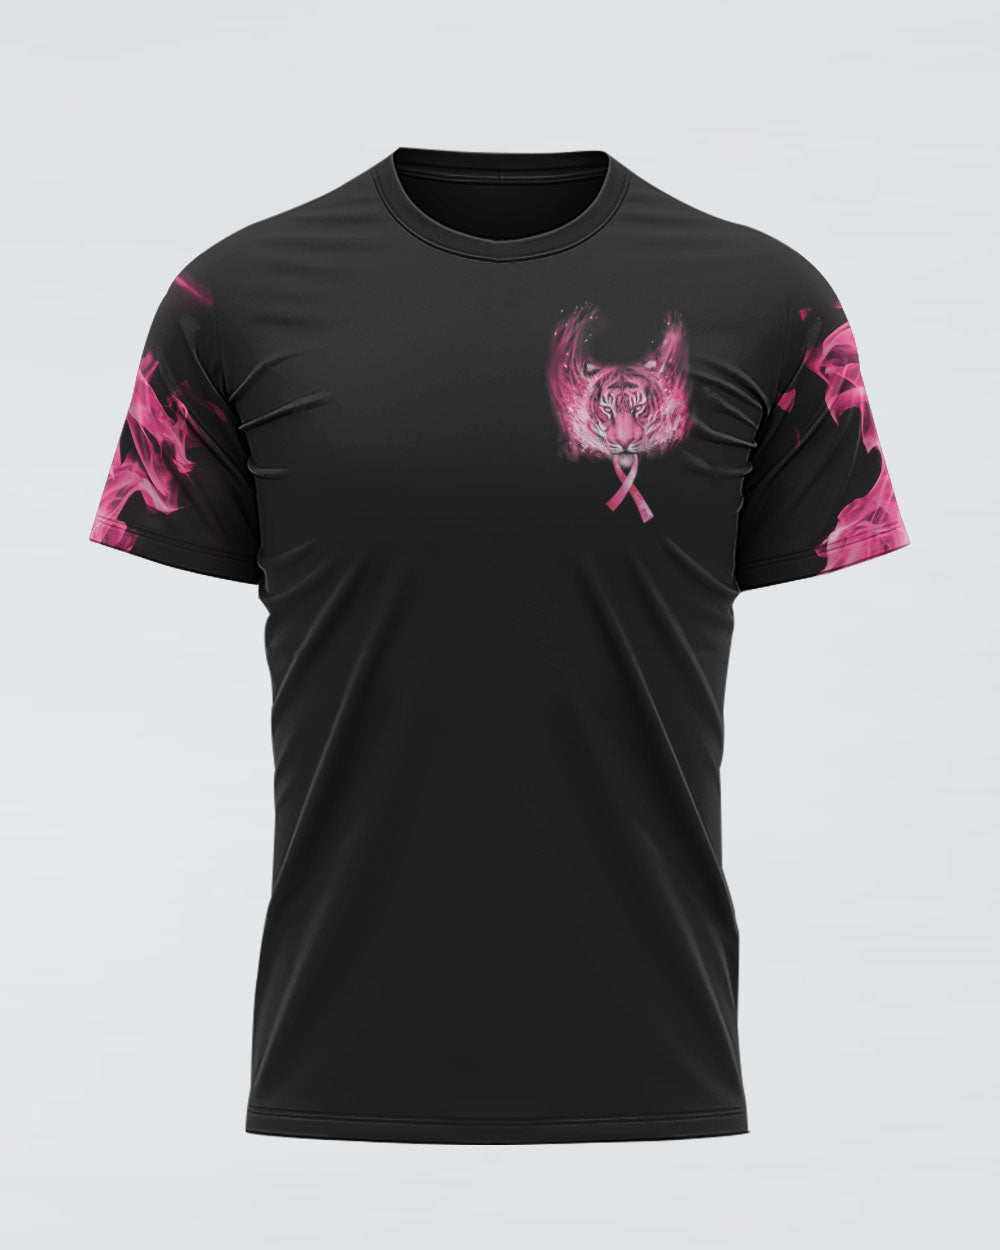 Fire Tiger Women's Breast Cancer Awareness Tshirt